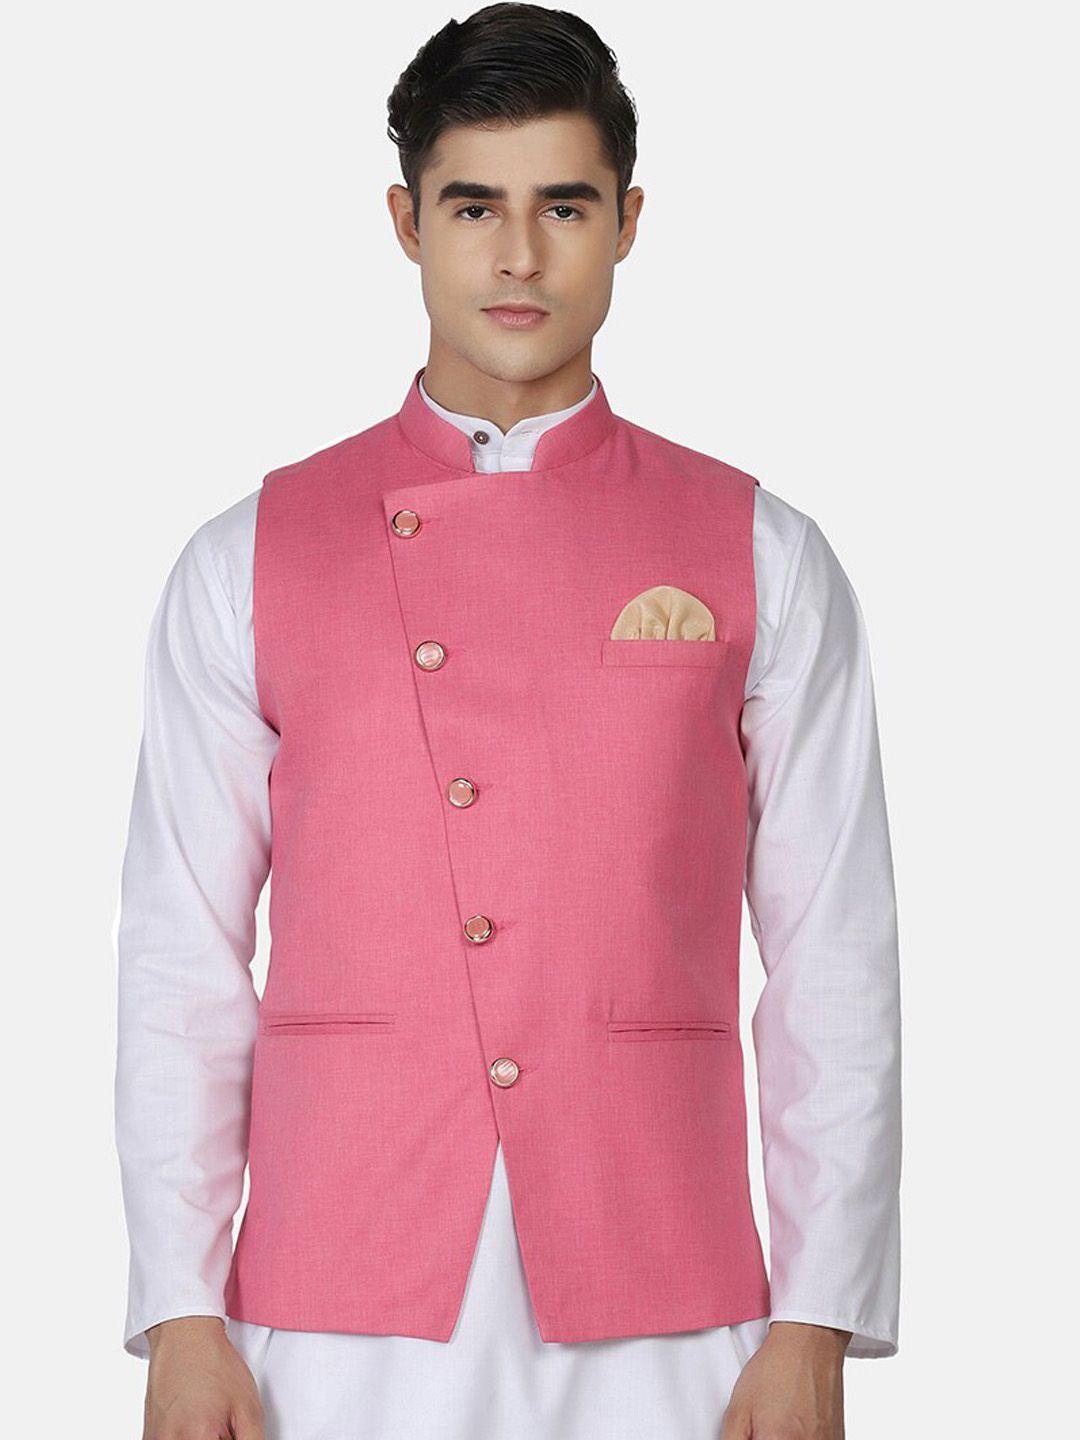 tahvo-men-pink-solid-nehru-jacket